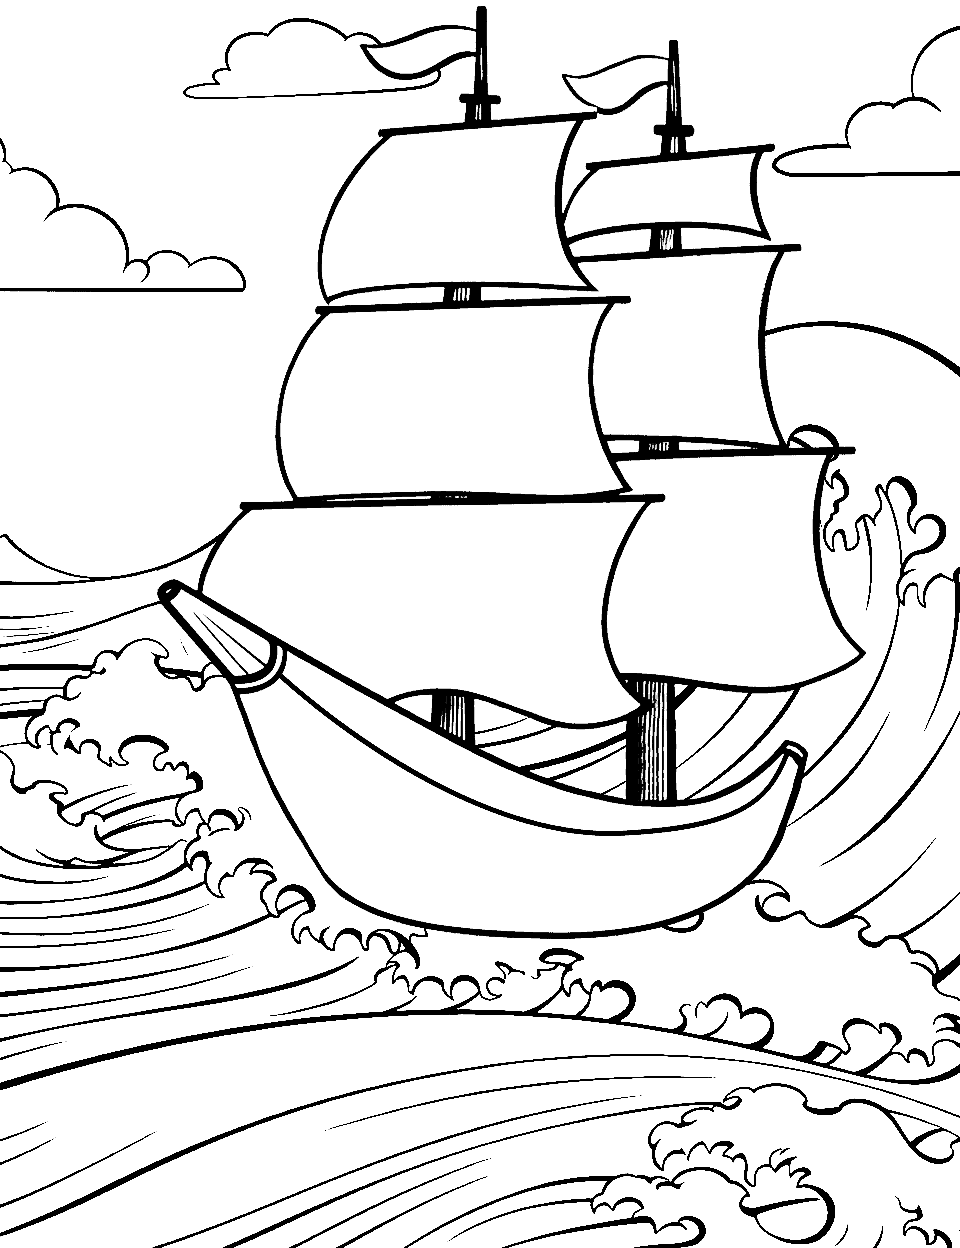 Banana Pirate Ship Fruit Coloring Page - A banana shaped like a pirate ship.